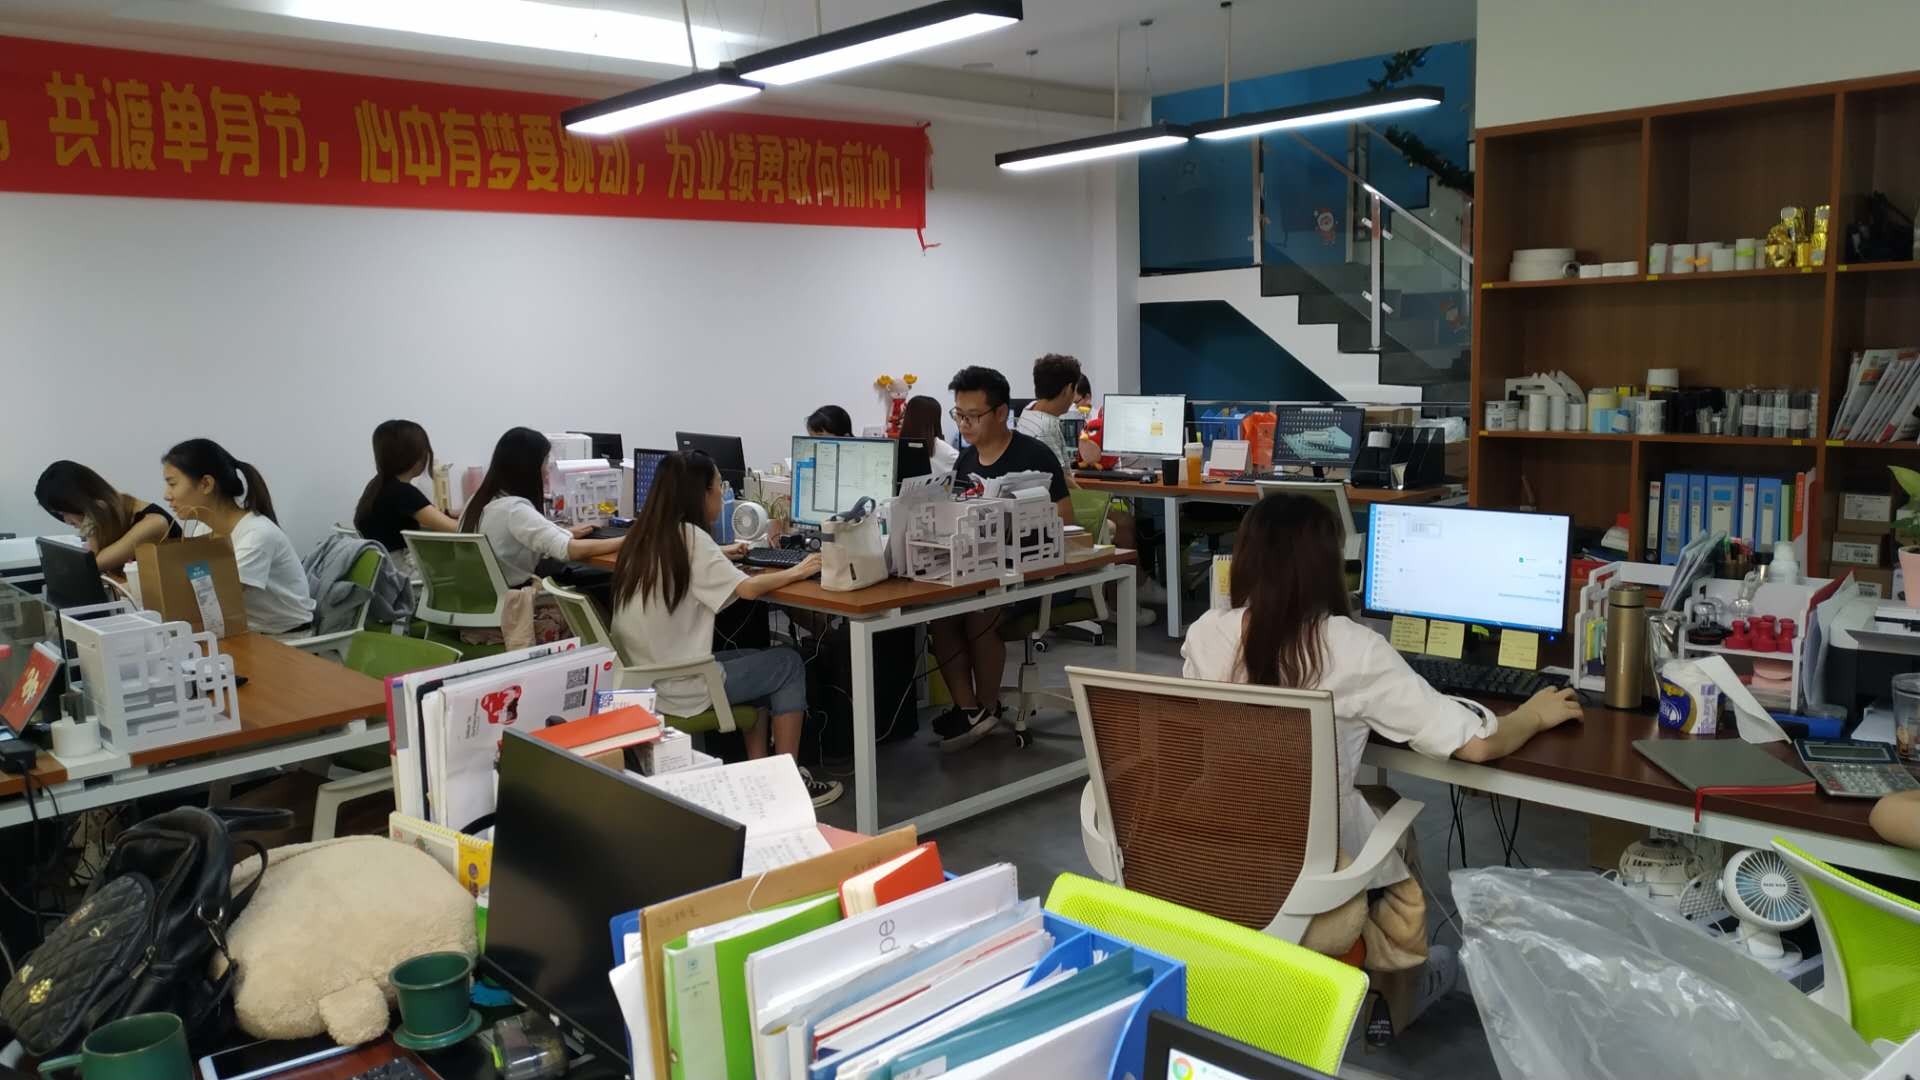 Guangzhou HeiMi Information Technology Co., Ltd.